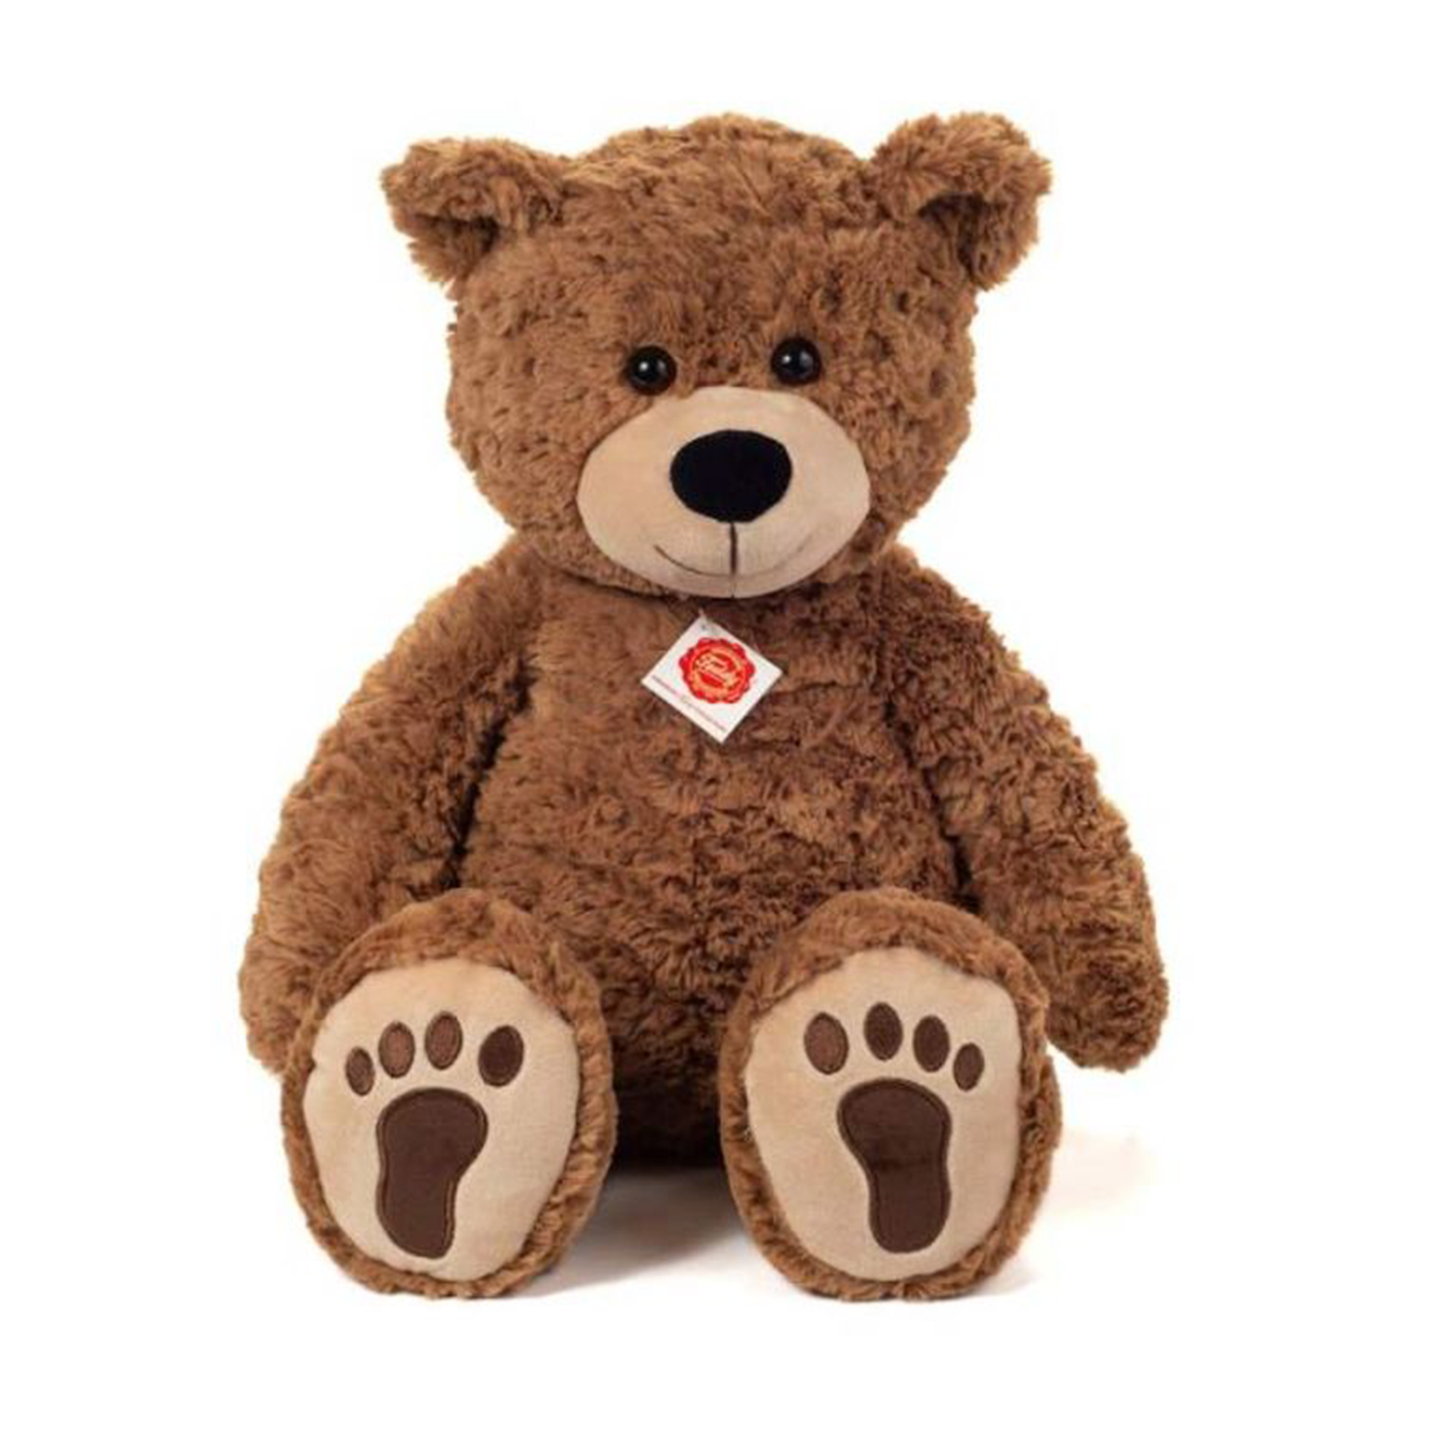 Hermann Teddy Bear with paw pads - 55cm